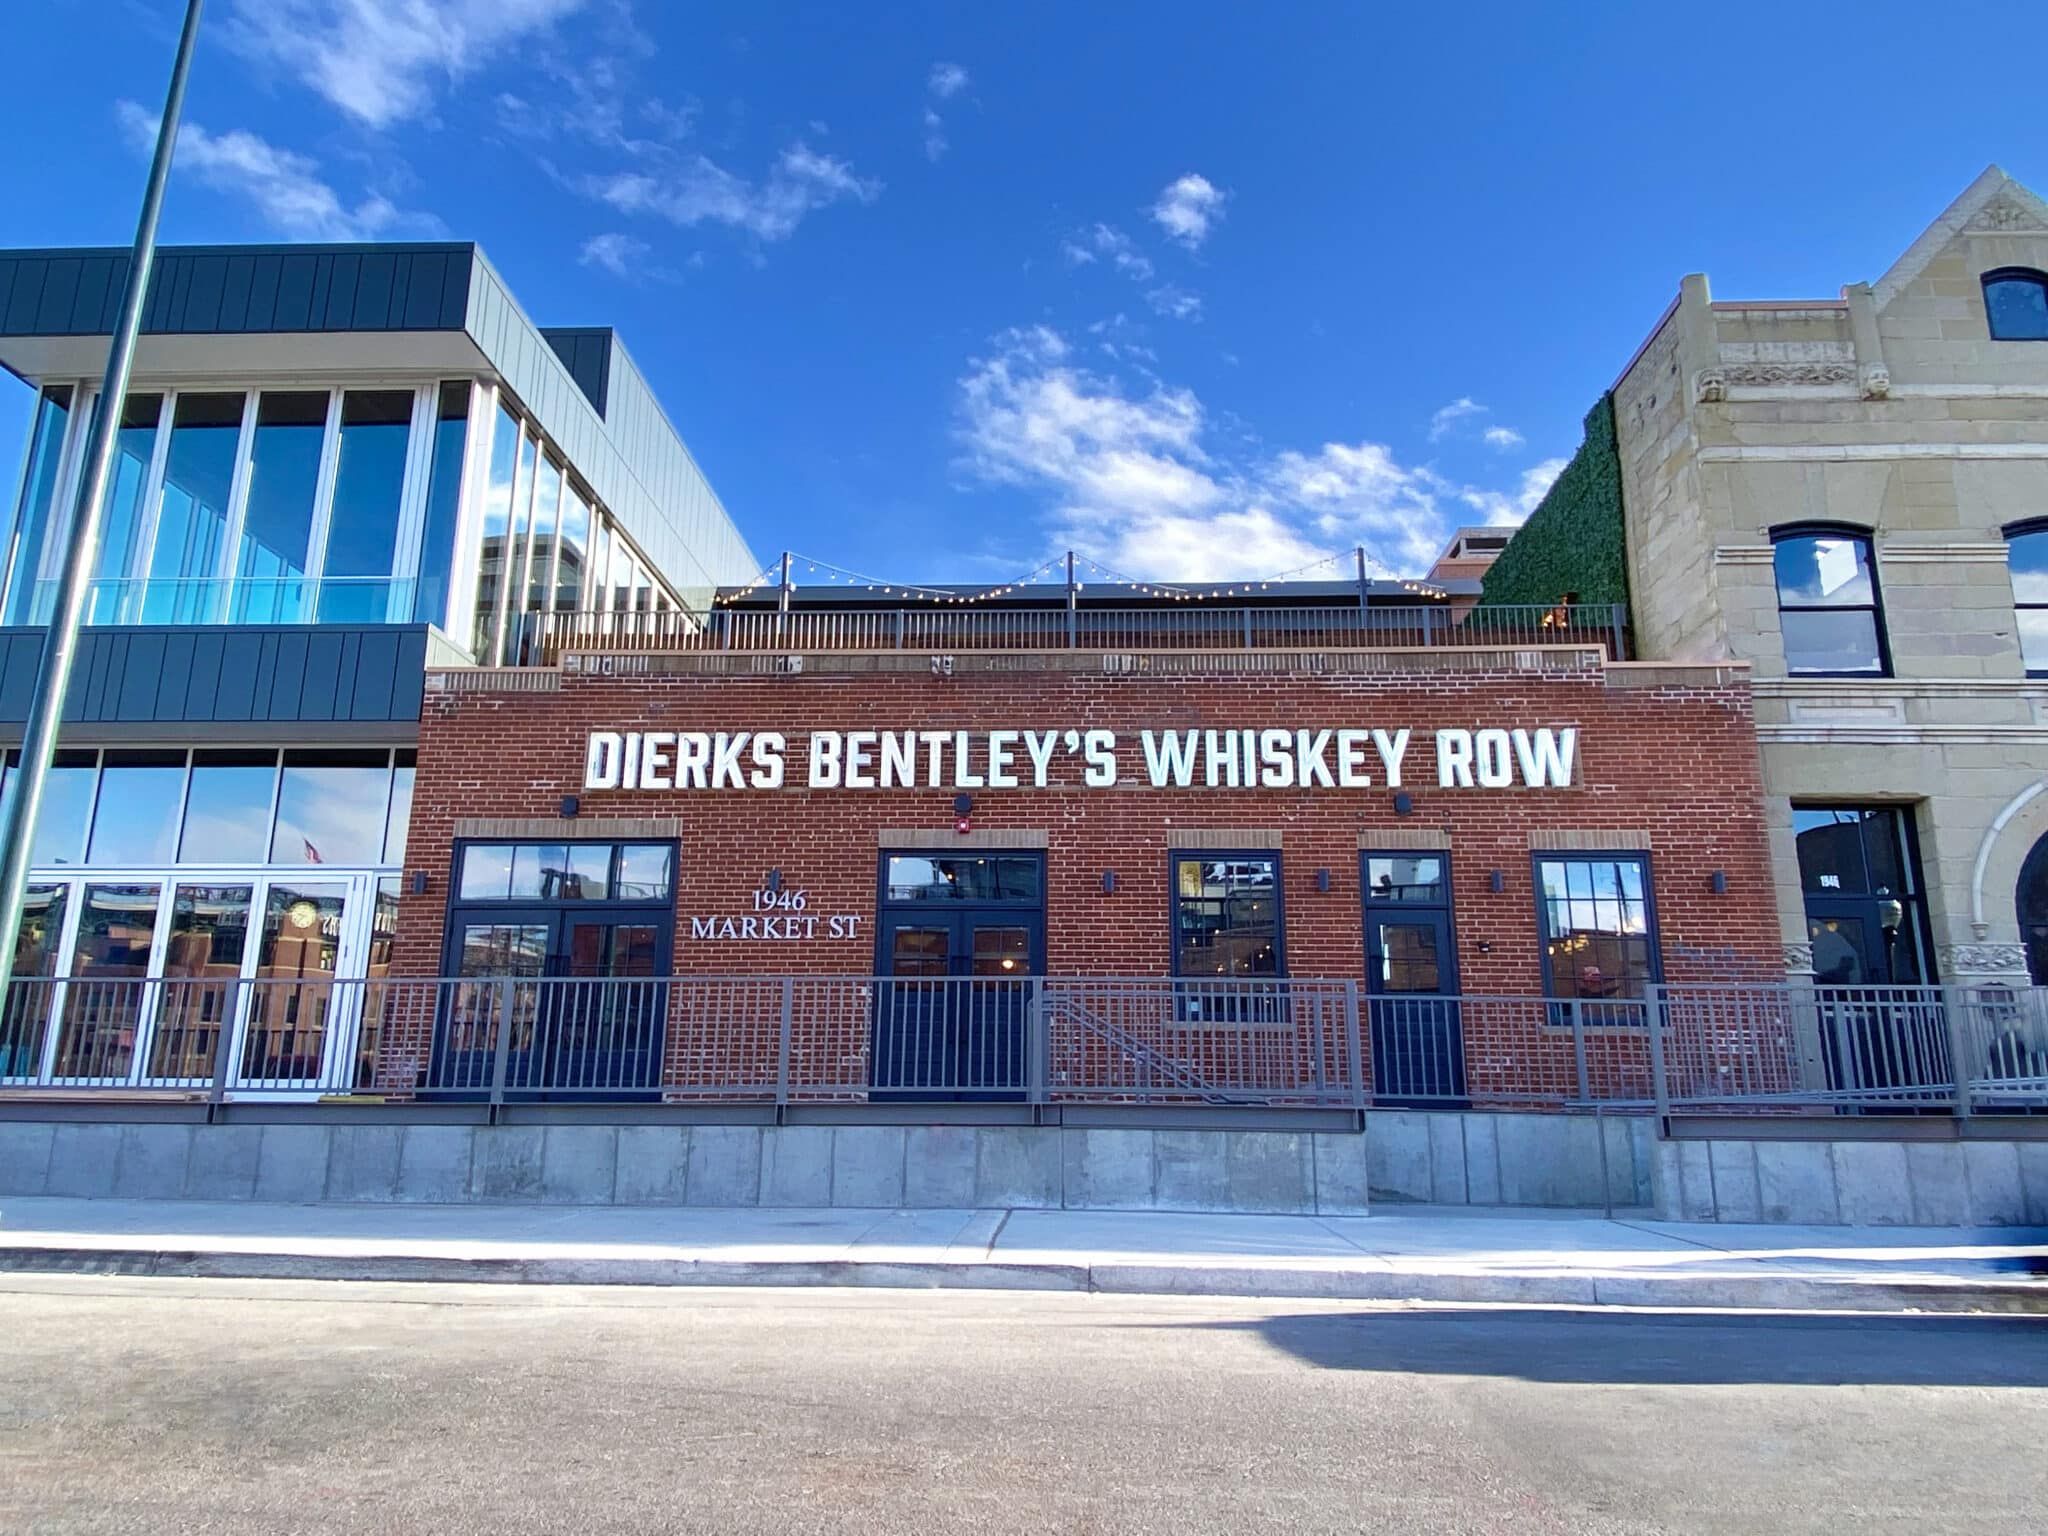 A low brown building hosting Dierks Bentley's Whiskey Row